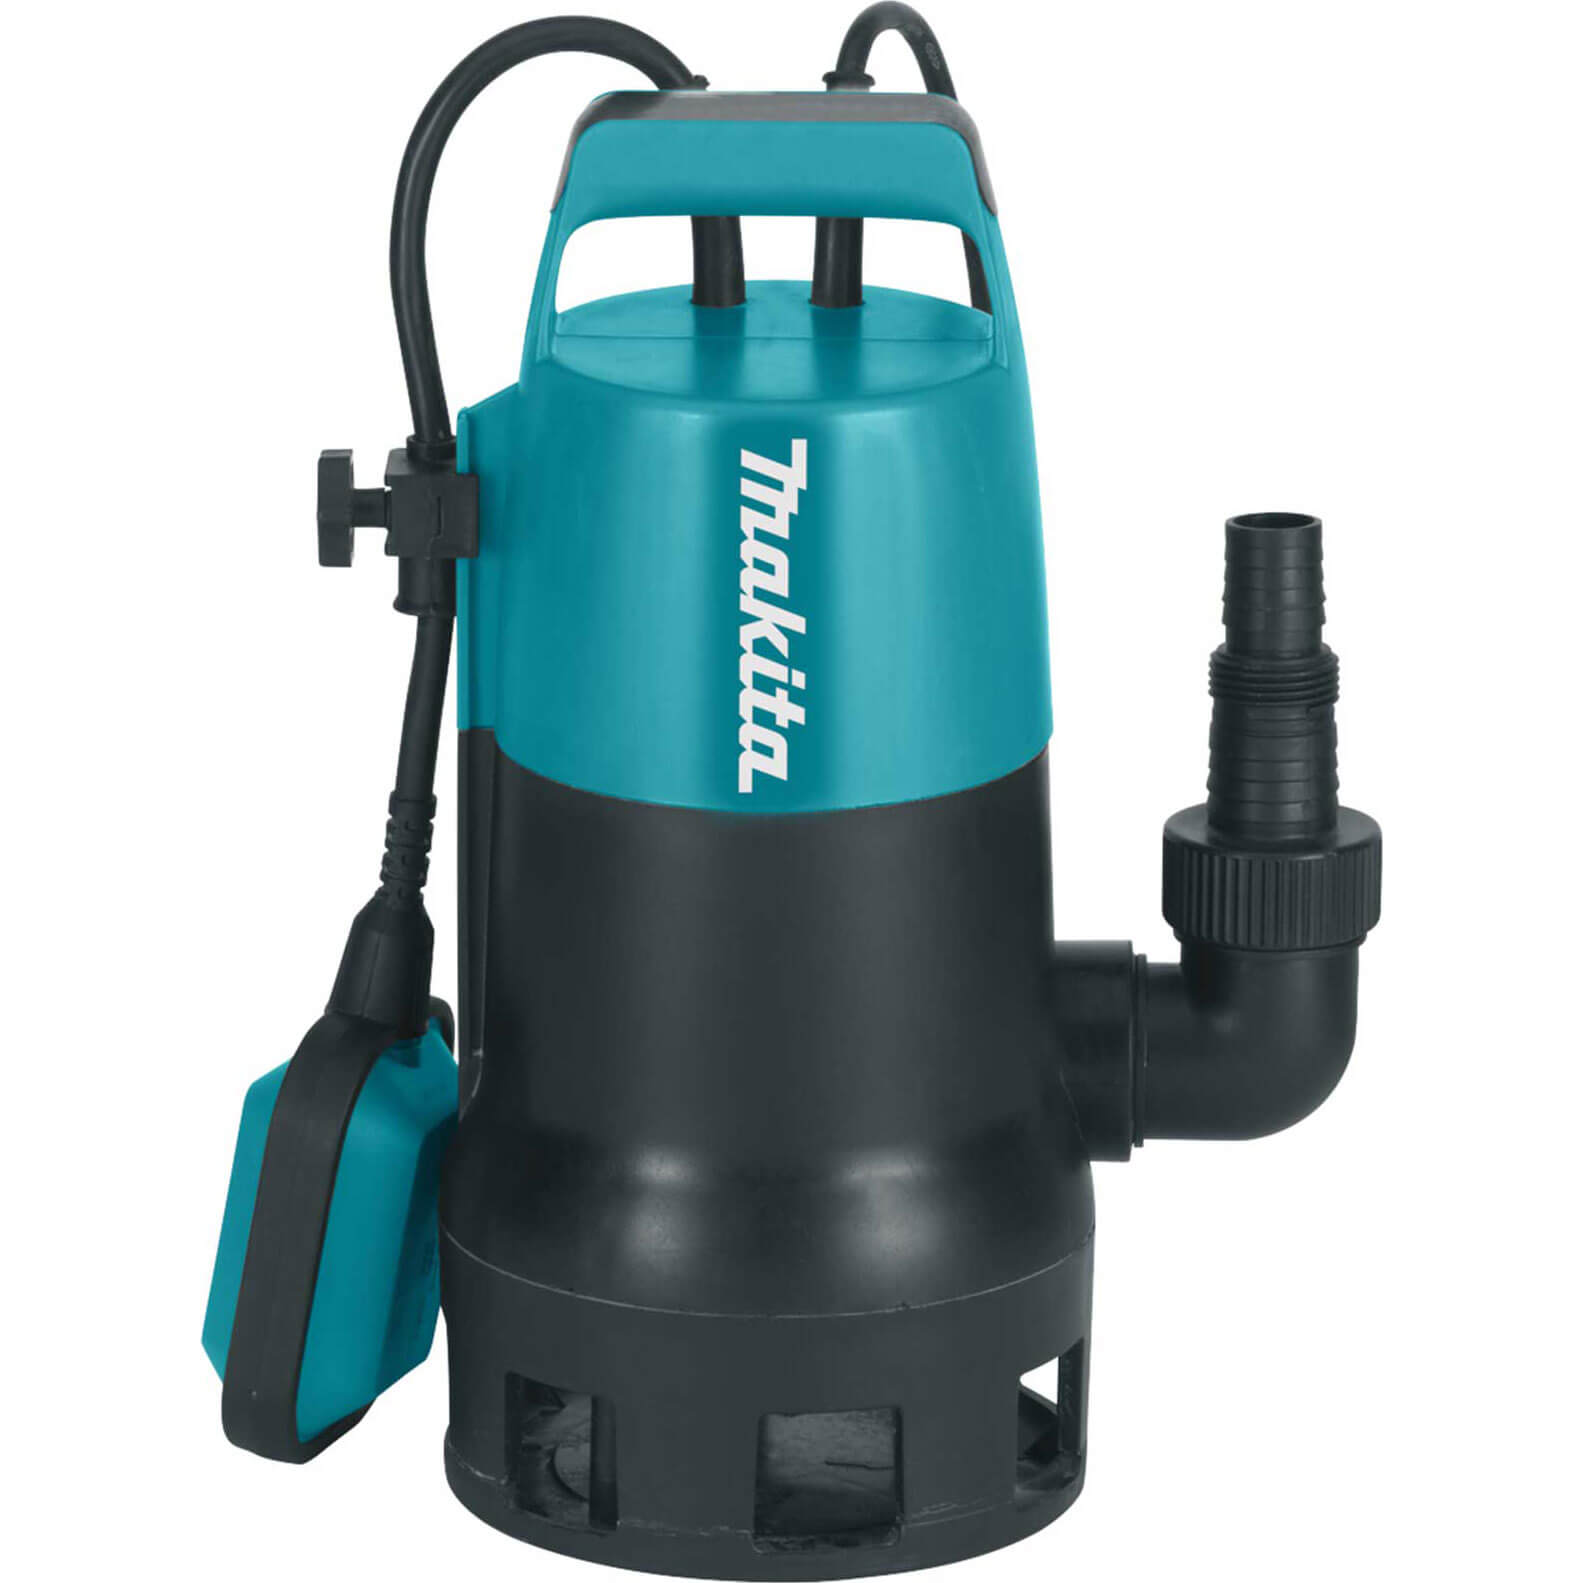 Image of Makita PF0410 Submersible Clean Water Pump 240v